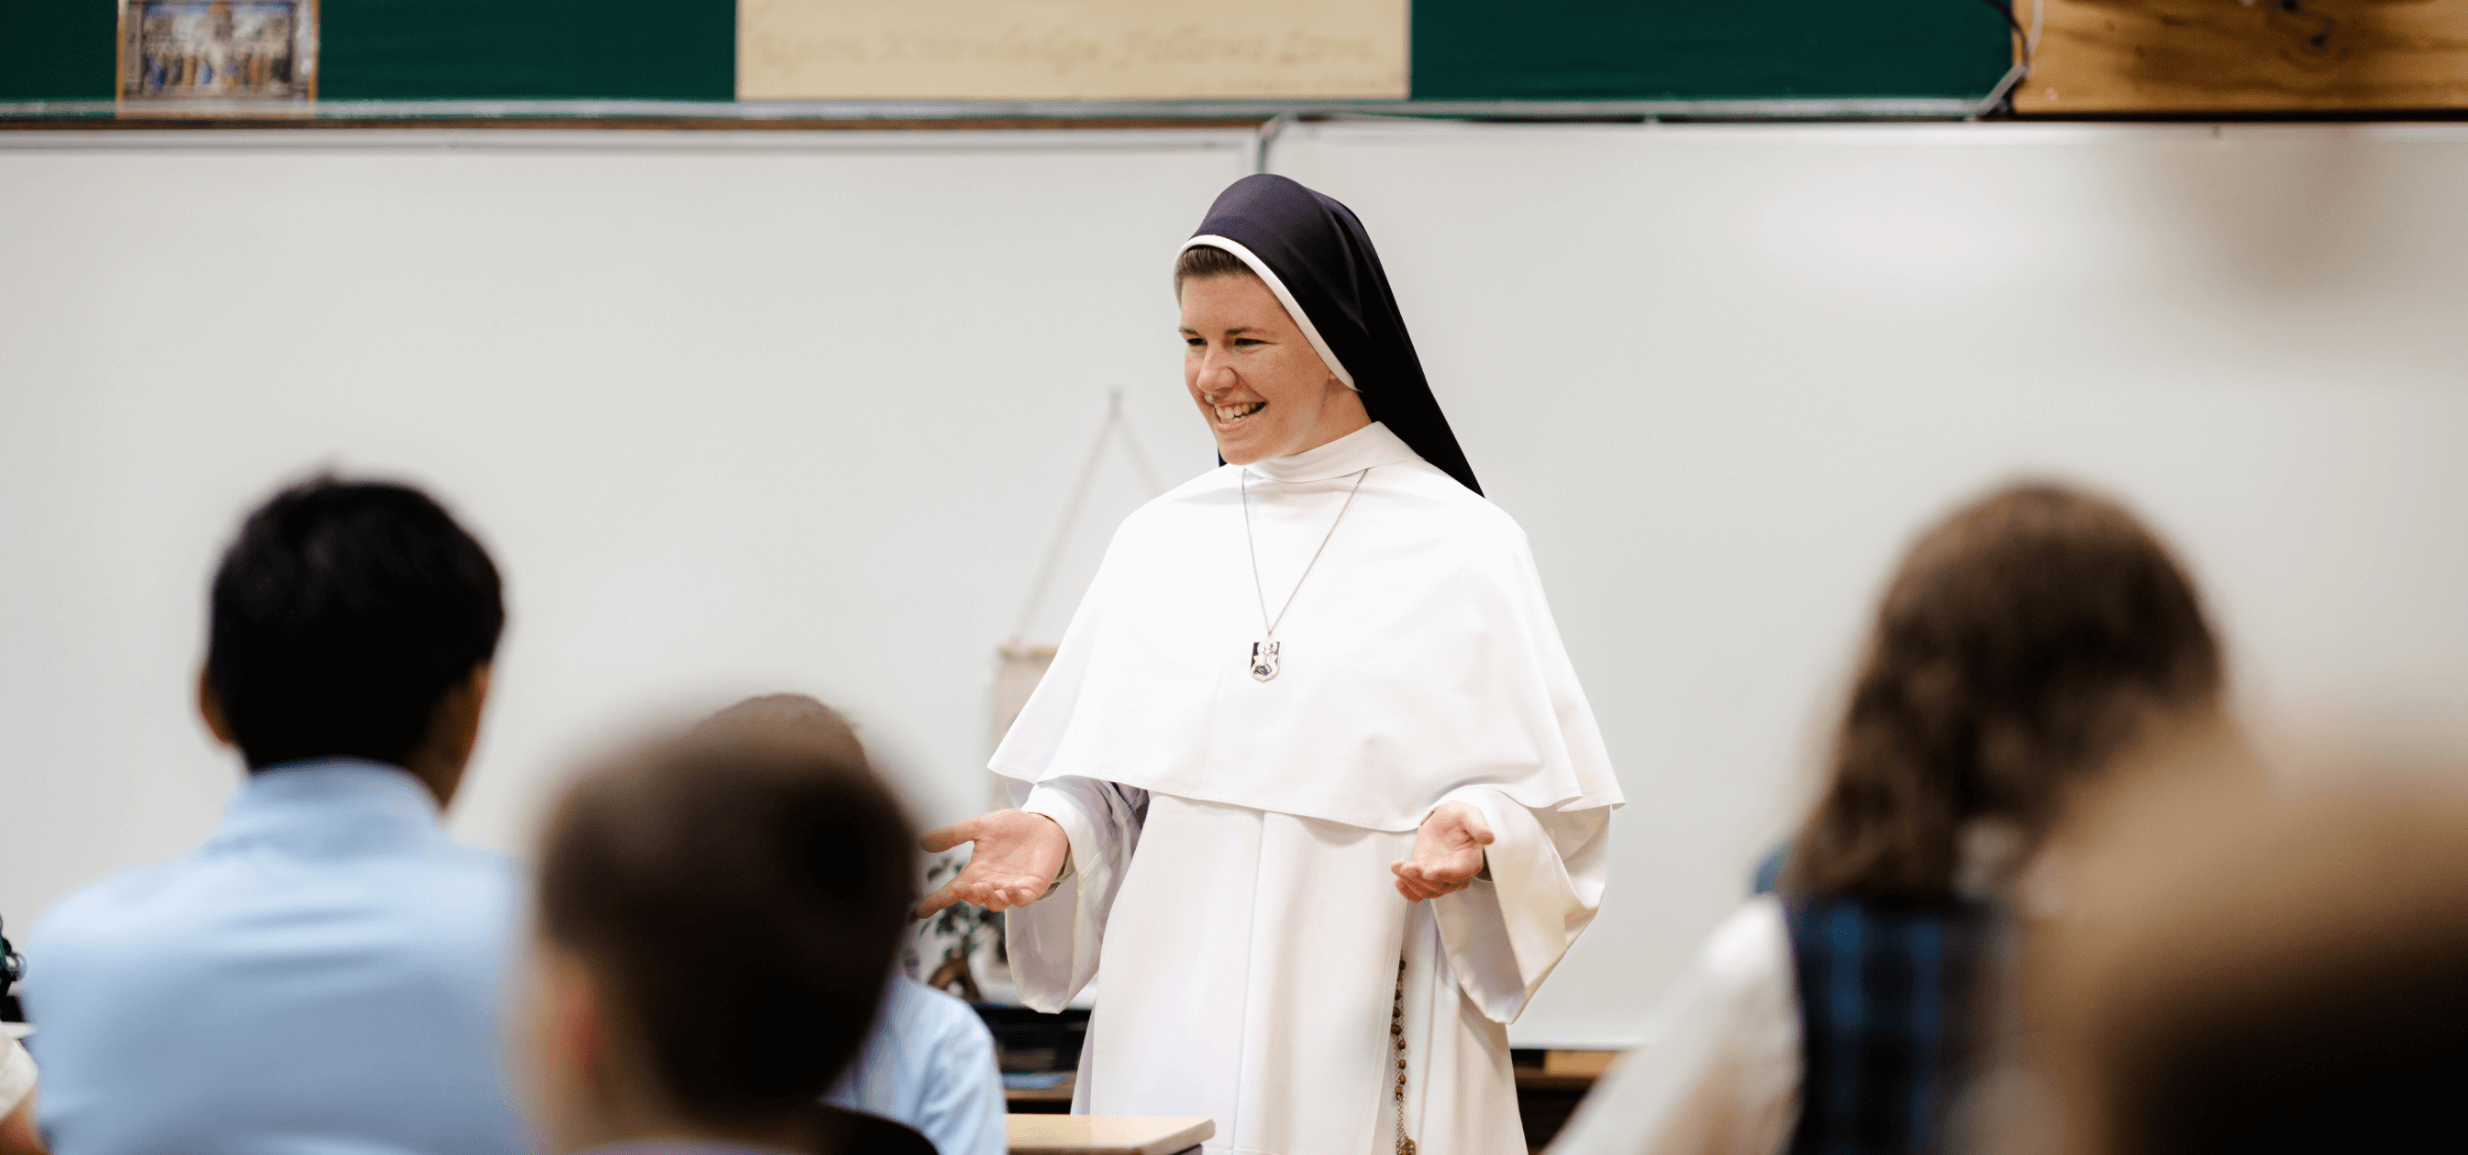 dominican sisters catholic religious vocations women prayer faith homepage hero teacher classroom